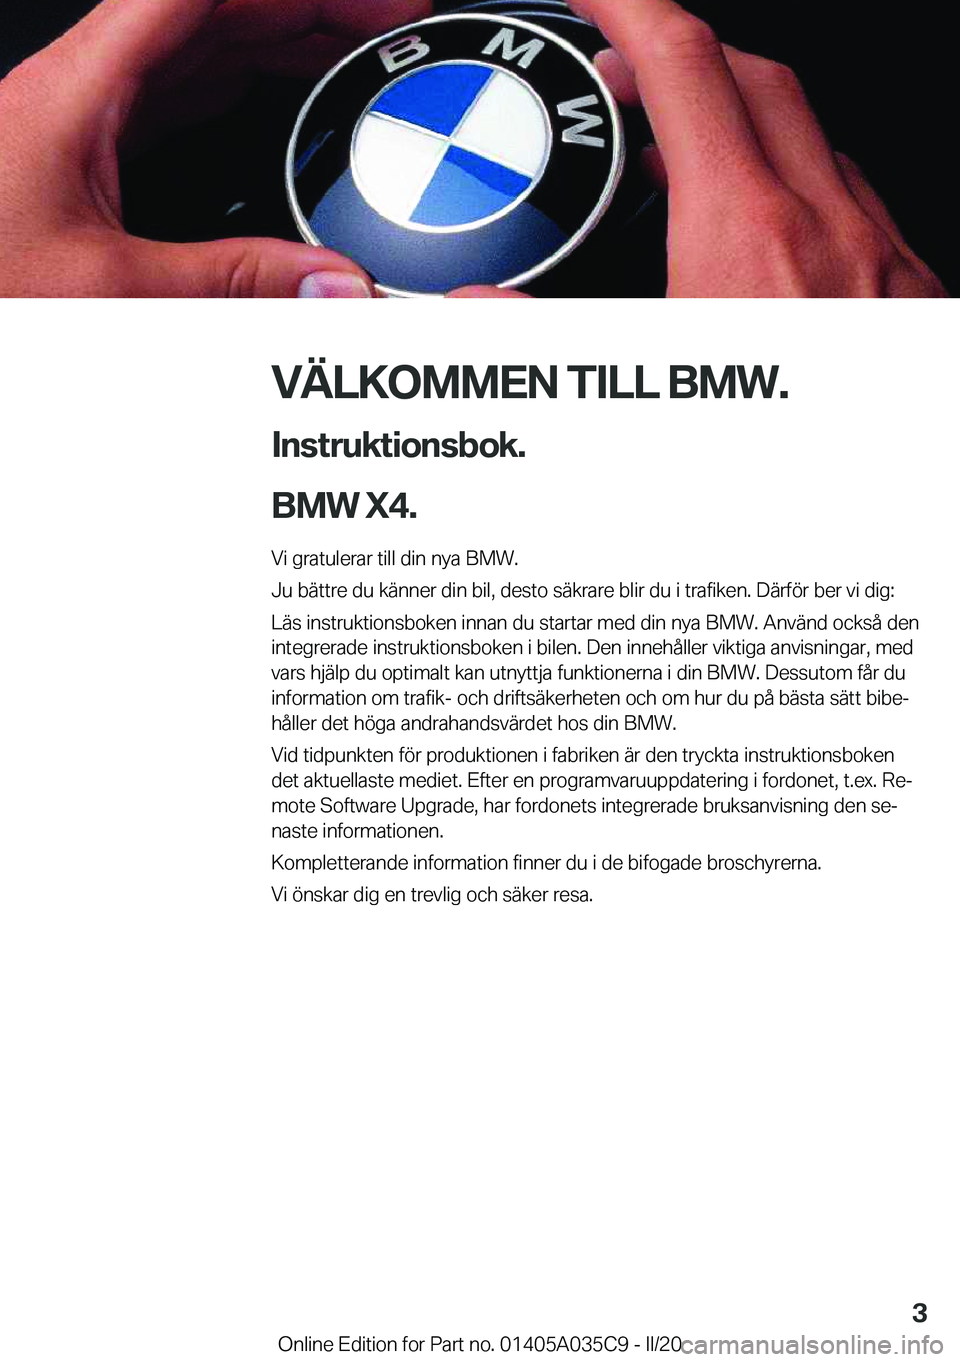 BMW X4 2020  InstruktionsbÖcker (in Swedish) �V�Ä�L�K�O�M�M�E�N��T�I�L�L��B�M�W�.�I�n�s�t�r�u�k�t�i�o�n�s�b�o�k�.
�B�M�W��X�4�.
�V�i��g�r�a�t�u�l�e�r�a�r��t�i�l�l��d�i�n��n�y�a��B�M�W�.
�J�u��b�ä�t�t�r�e��d�u��k�ä�n�n�e�r��d�i�n�